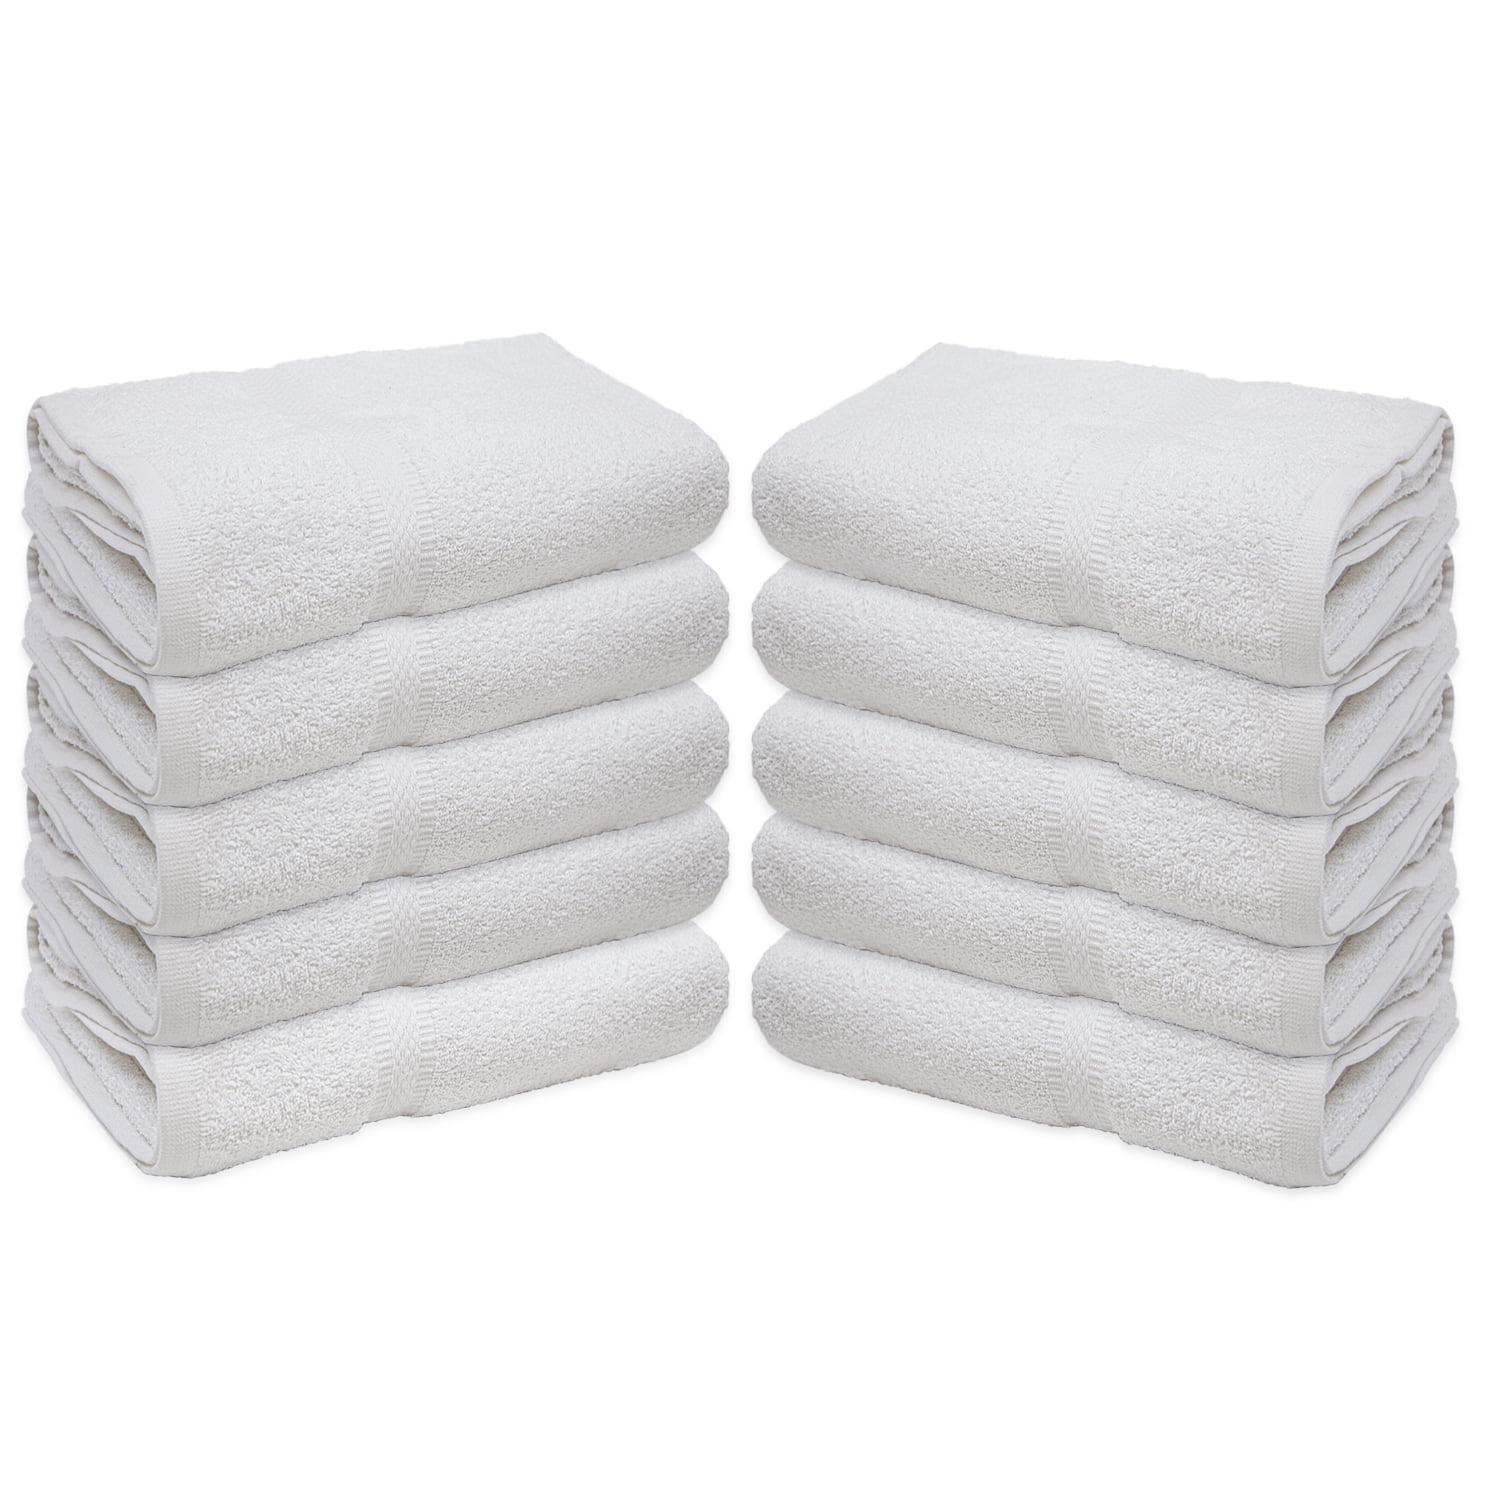 600 new white 100% cotton washcloths cam border hotel motel facial barber 12x12